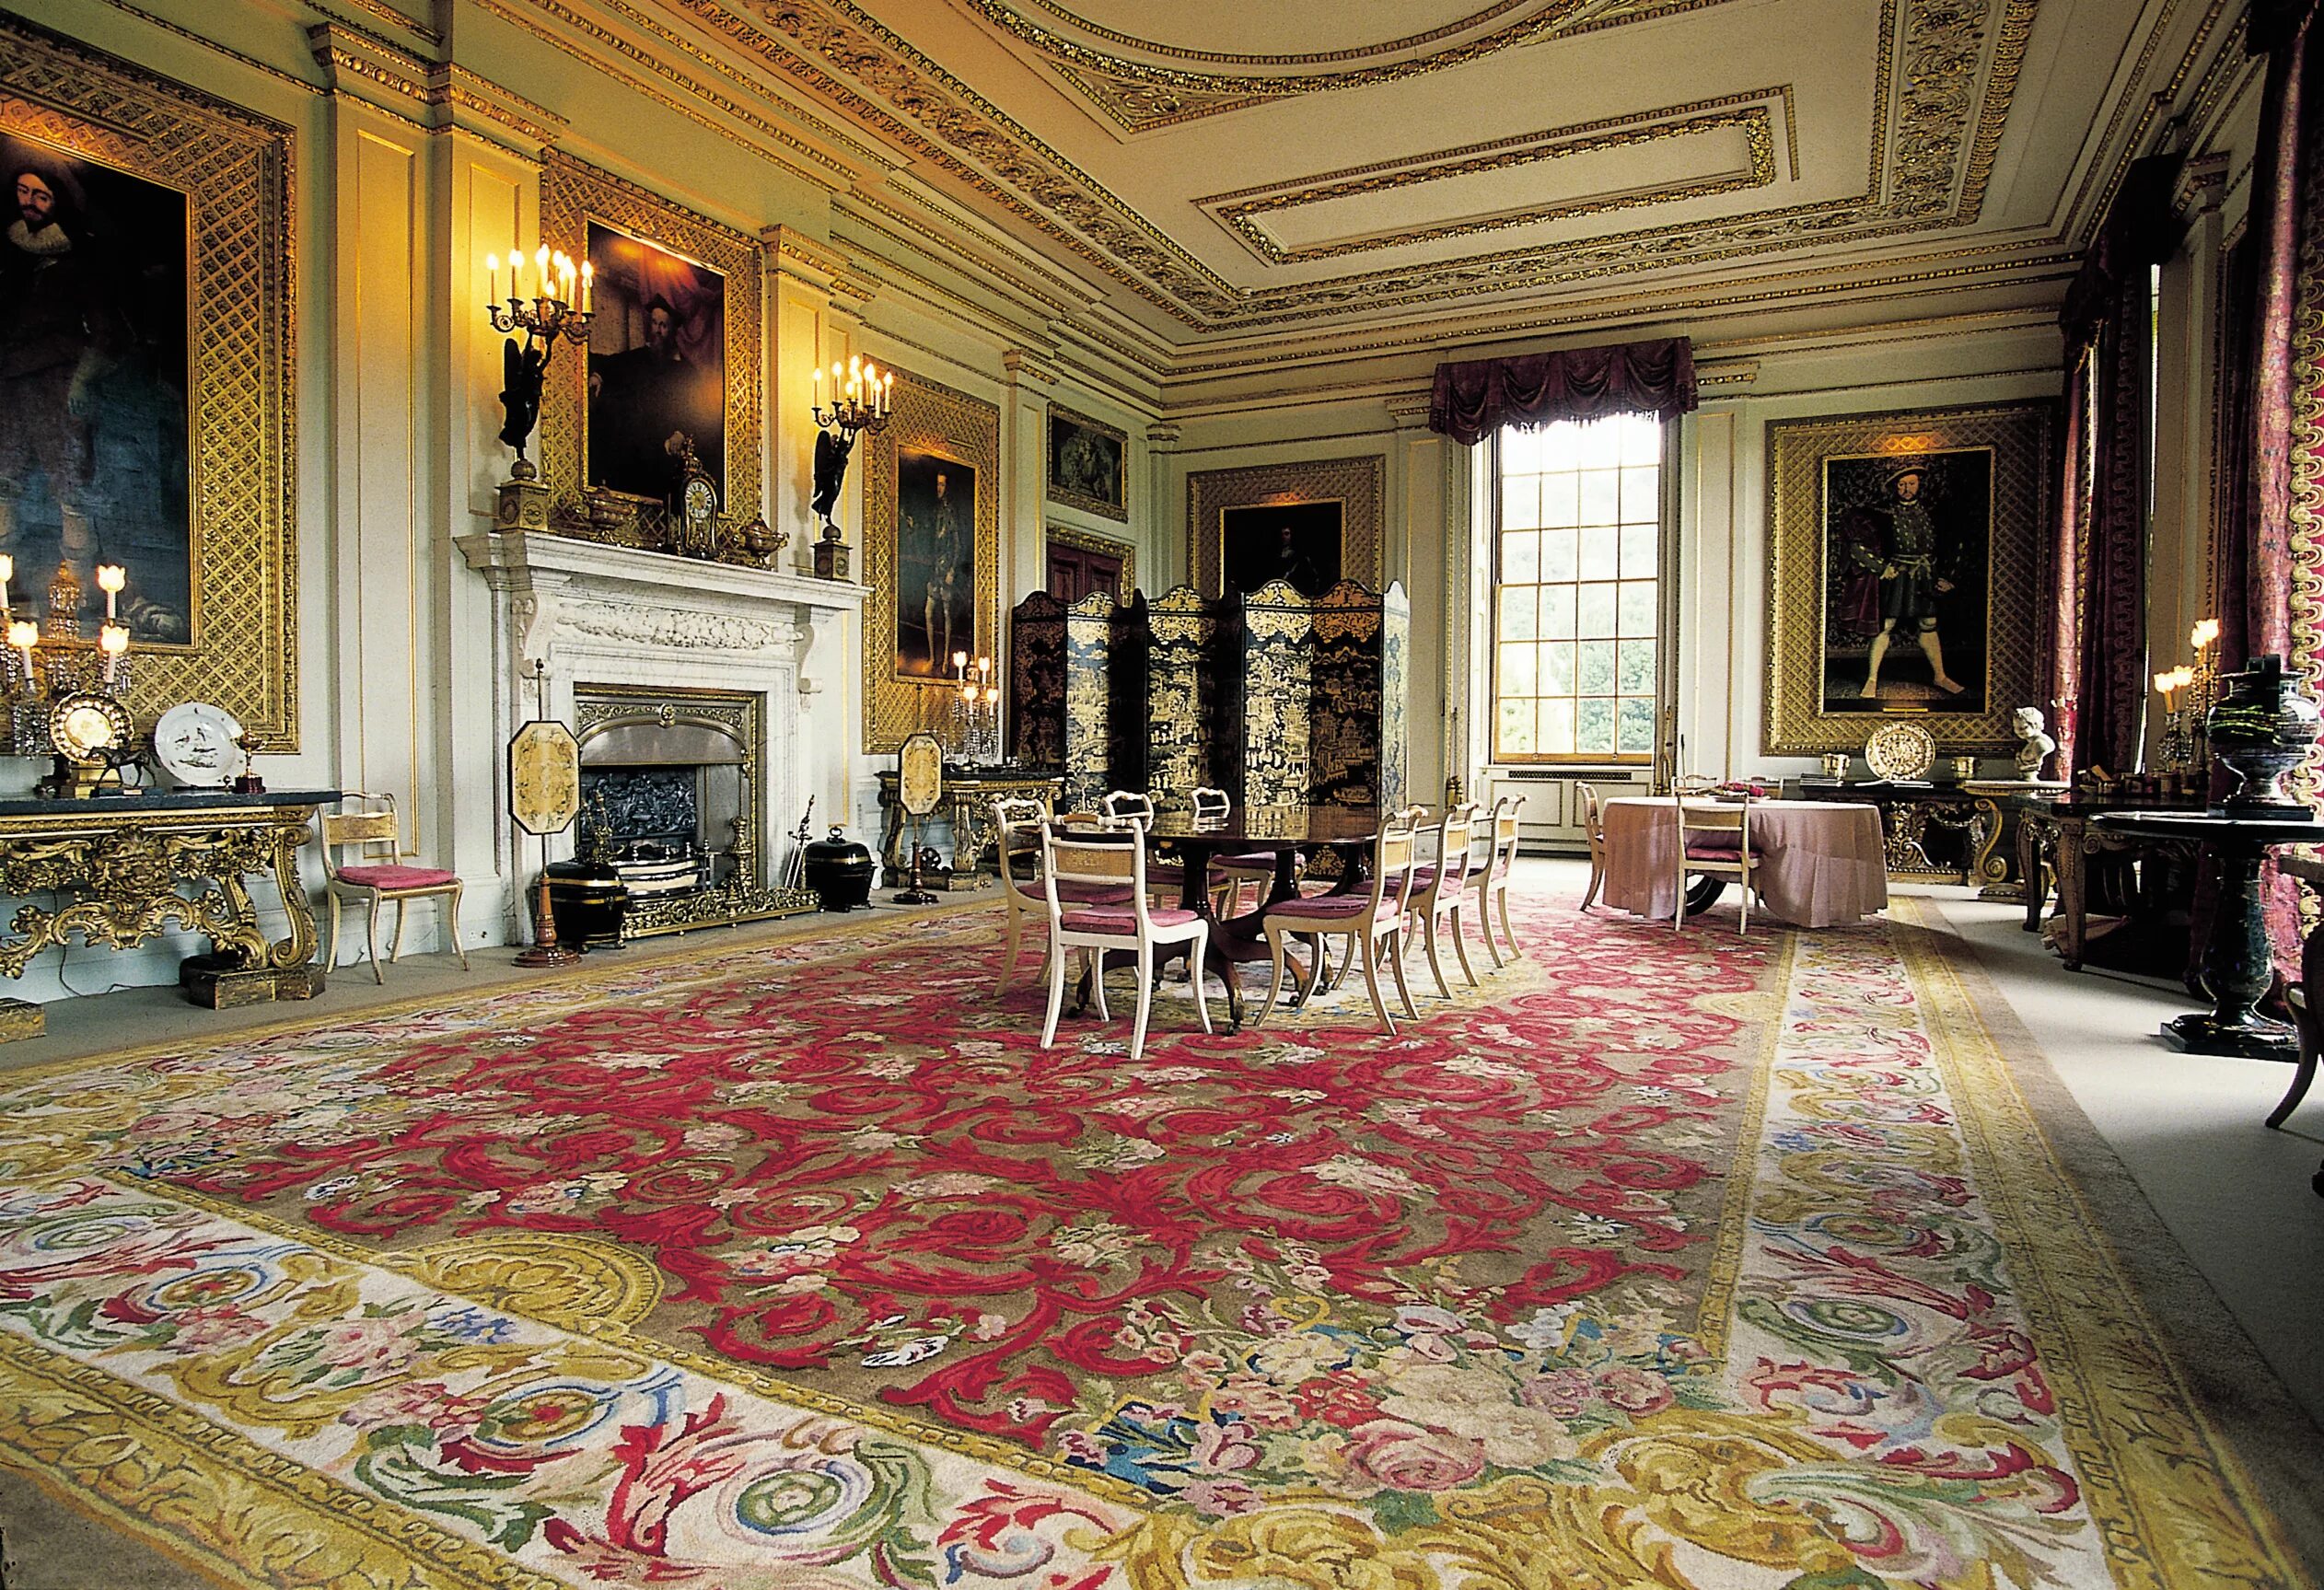 Чатсуорт Хаус интерьер. Дворец Chatsworth House. Поместье Чатсуорт Хаус интерьеры. Королевский дворец в Англии Викторианская эпоха. Обстановка эпохи